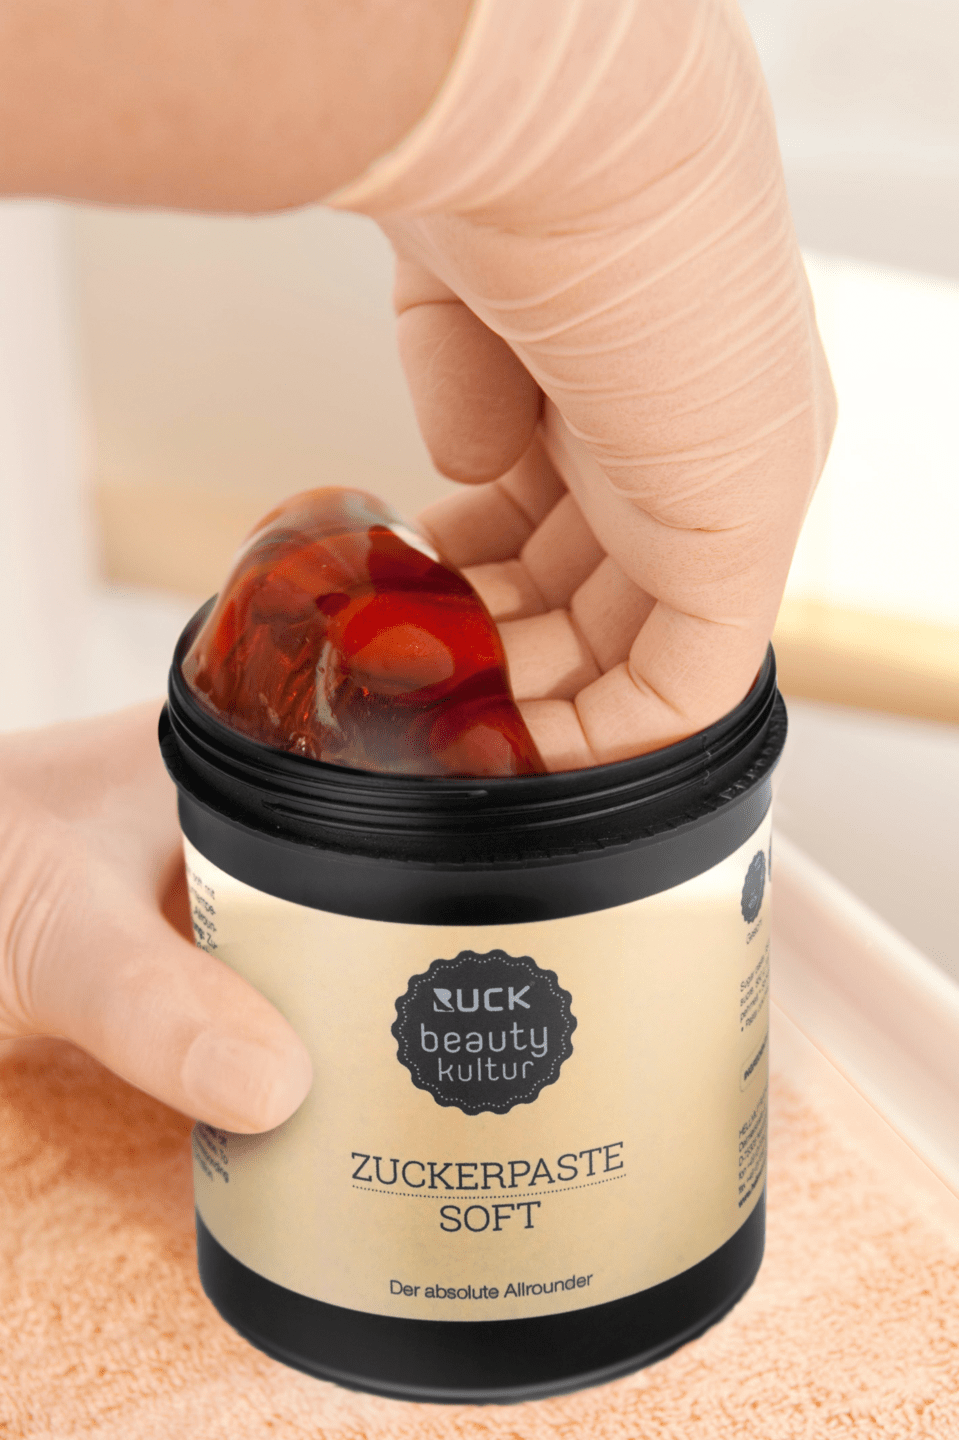 RUCK beautykultur - Zuckerpaste, 850 g